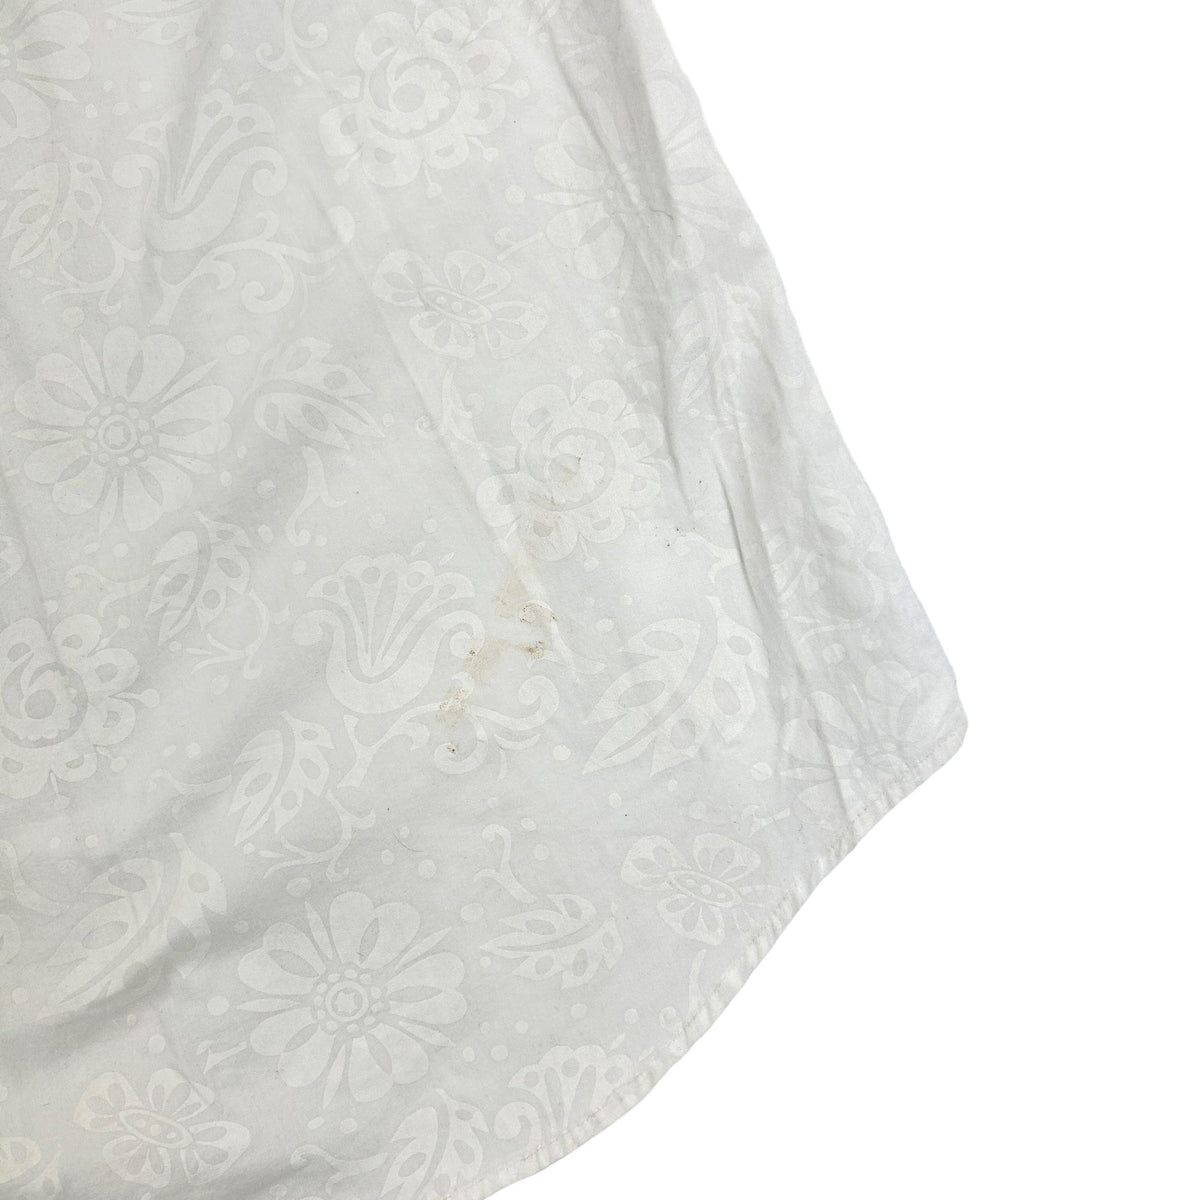 Vintage Stussy Floral Pattern Short Sleeve Shirt Size M